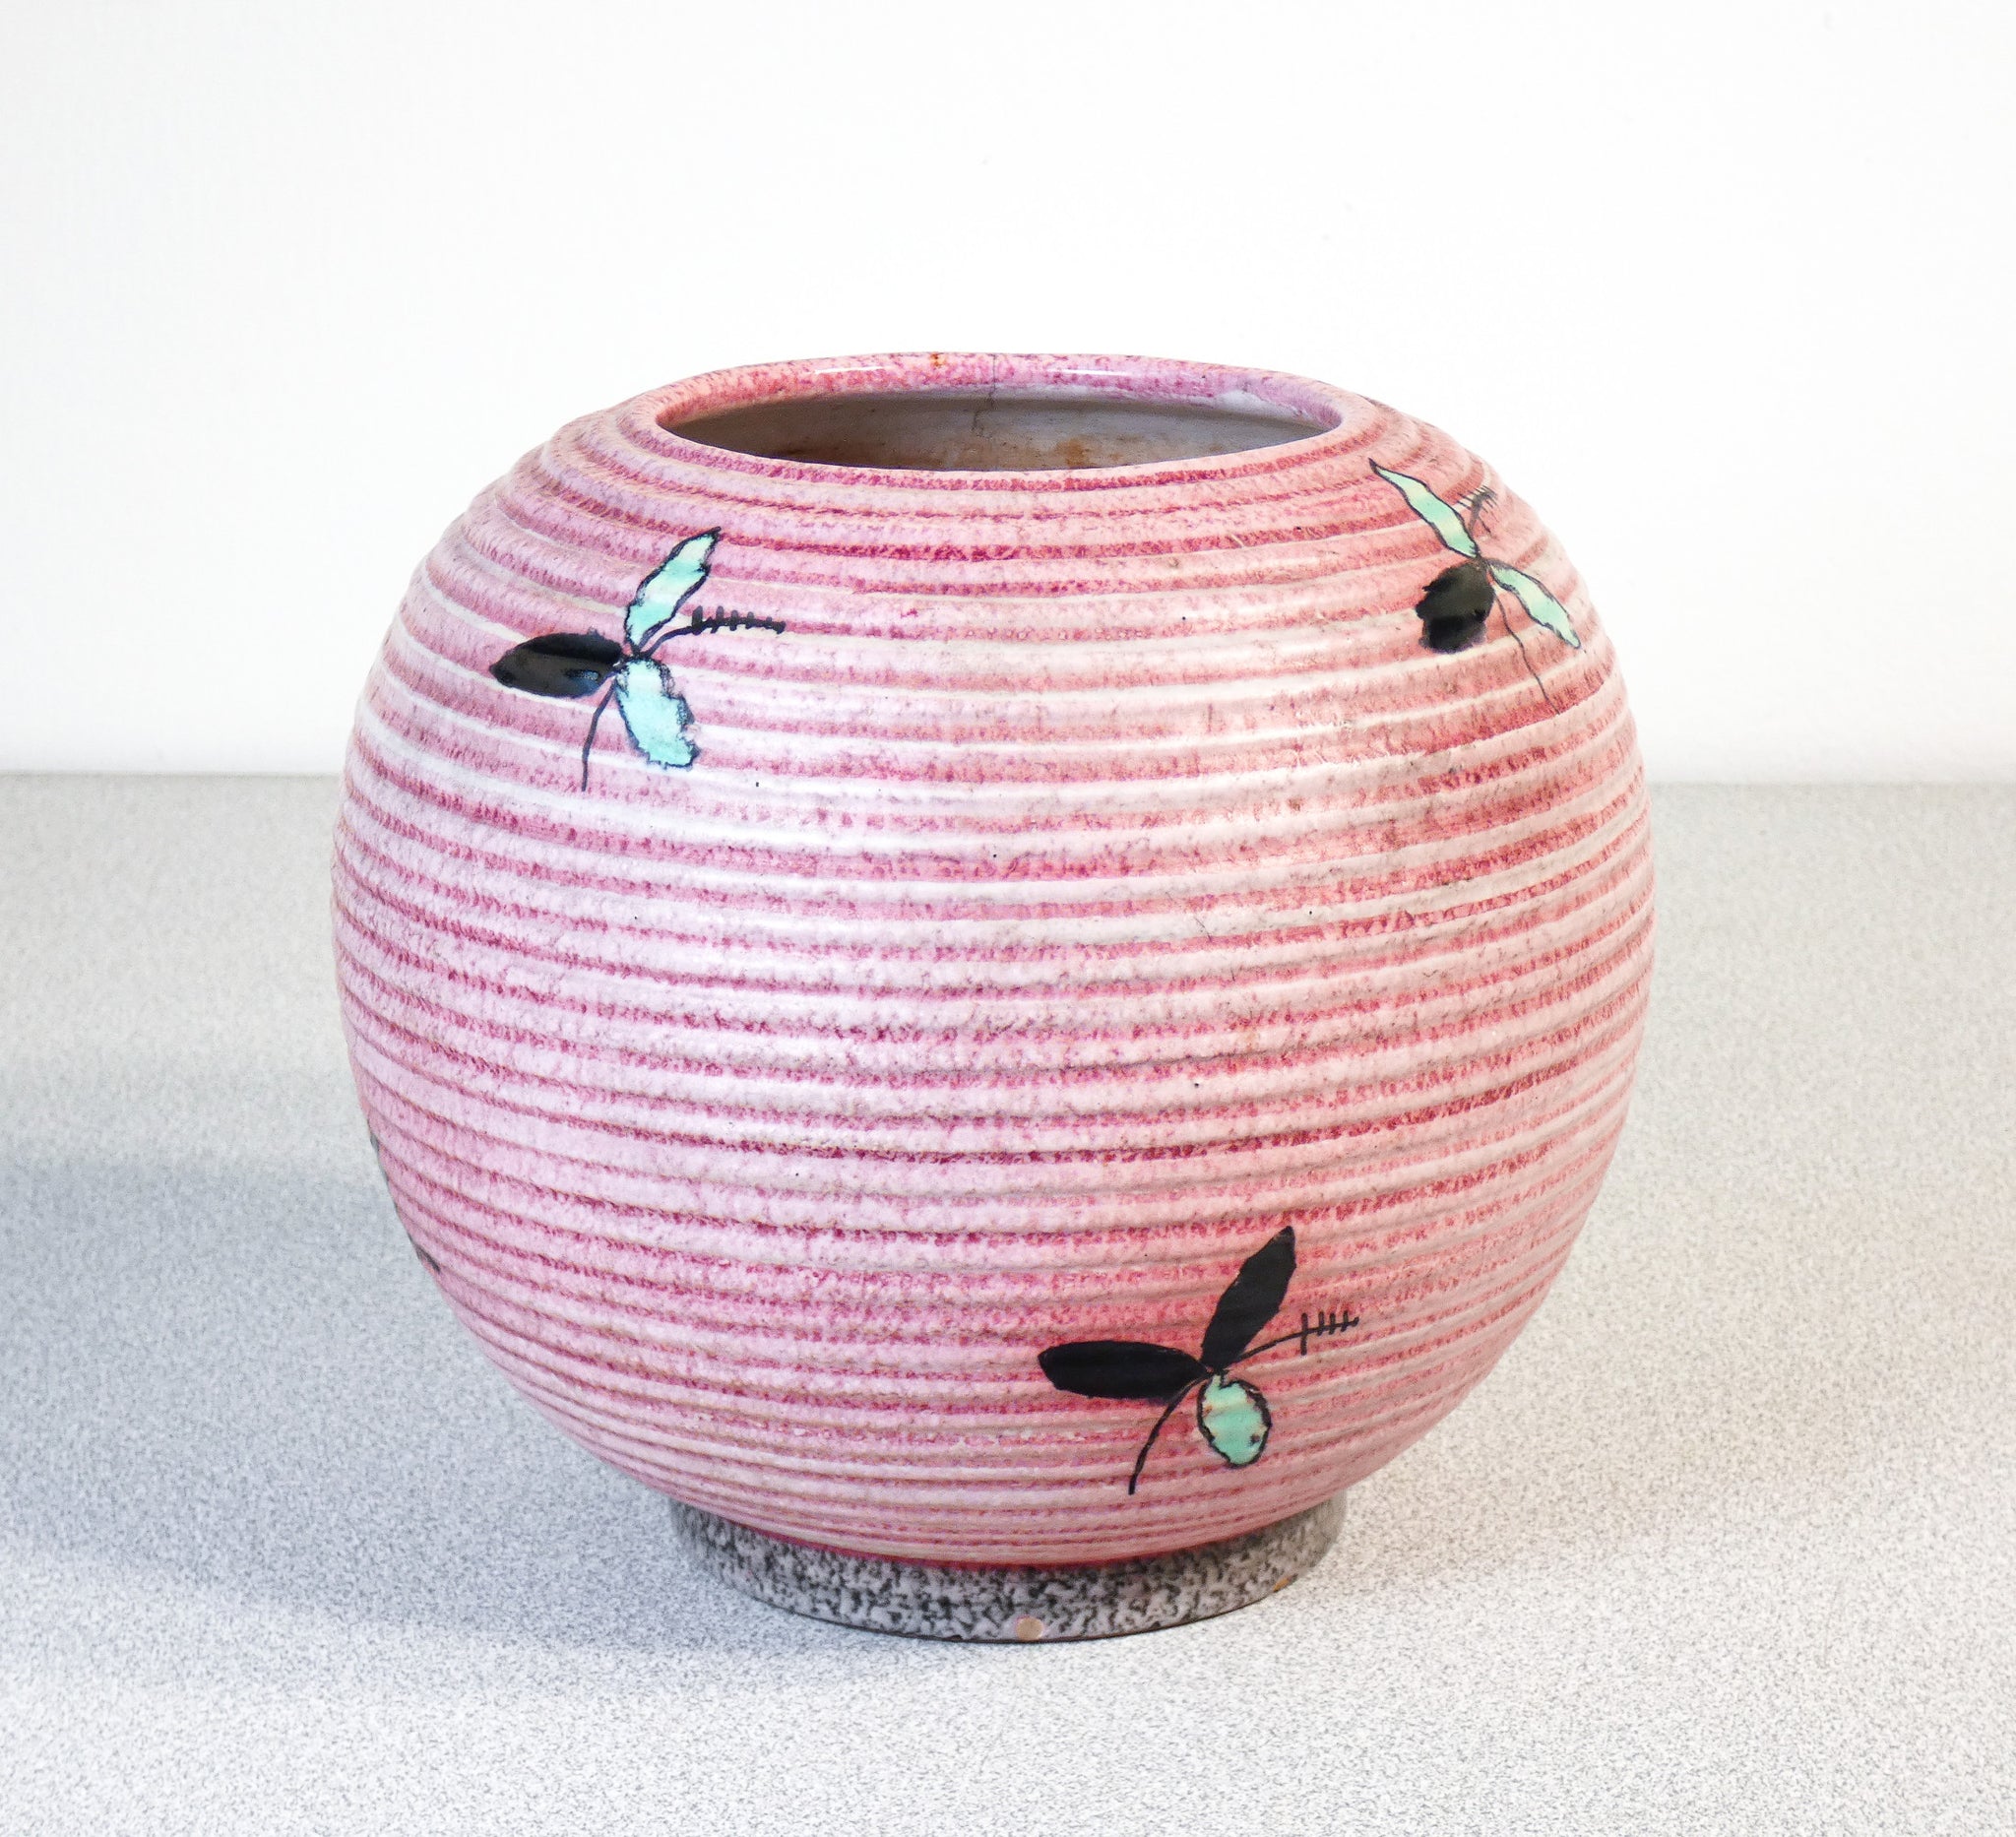 vaso maiolica deruta perugia ceramica design italia decorato a mano 1900